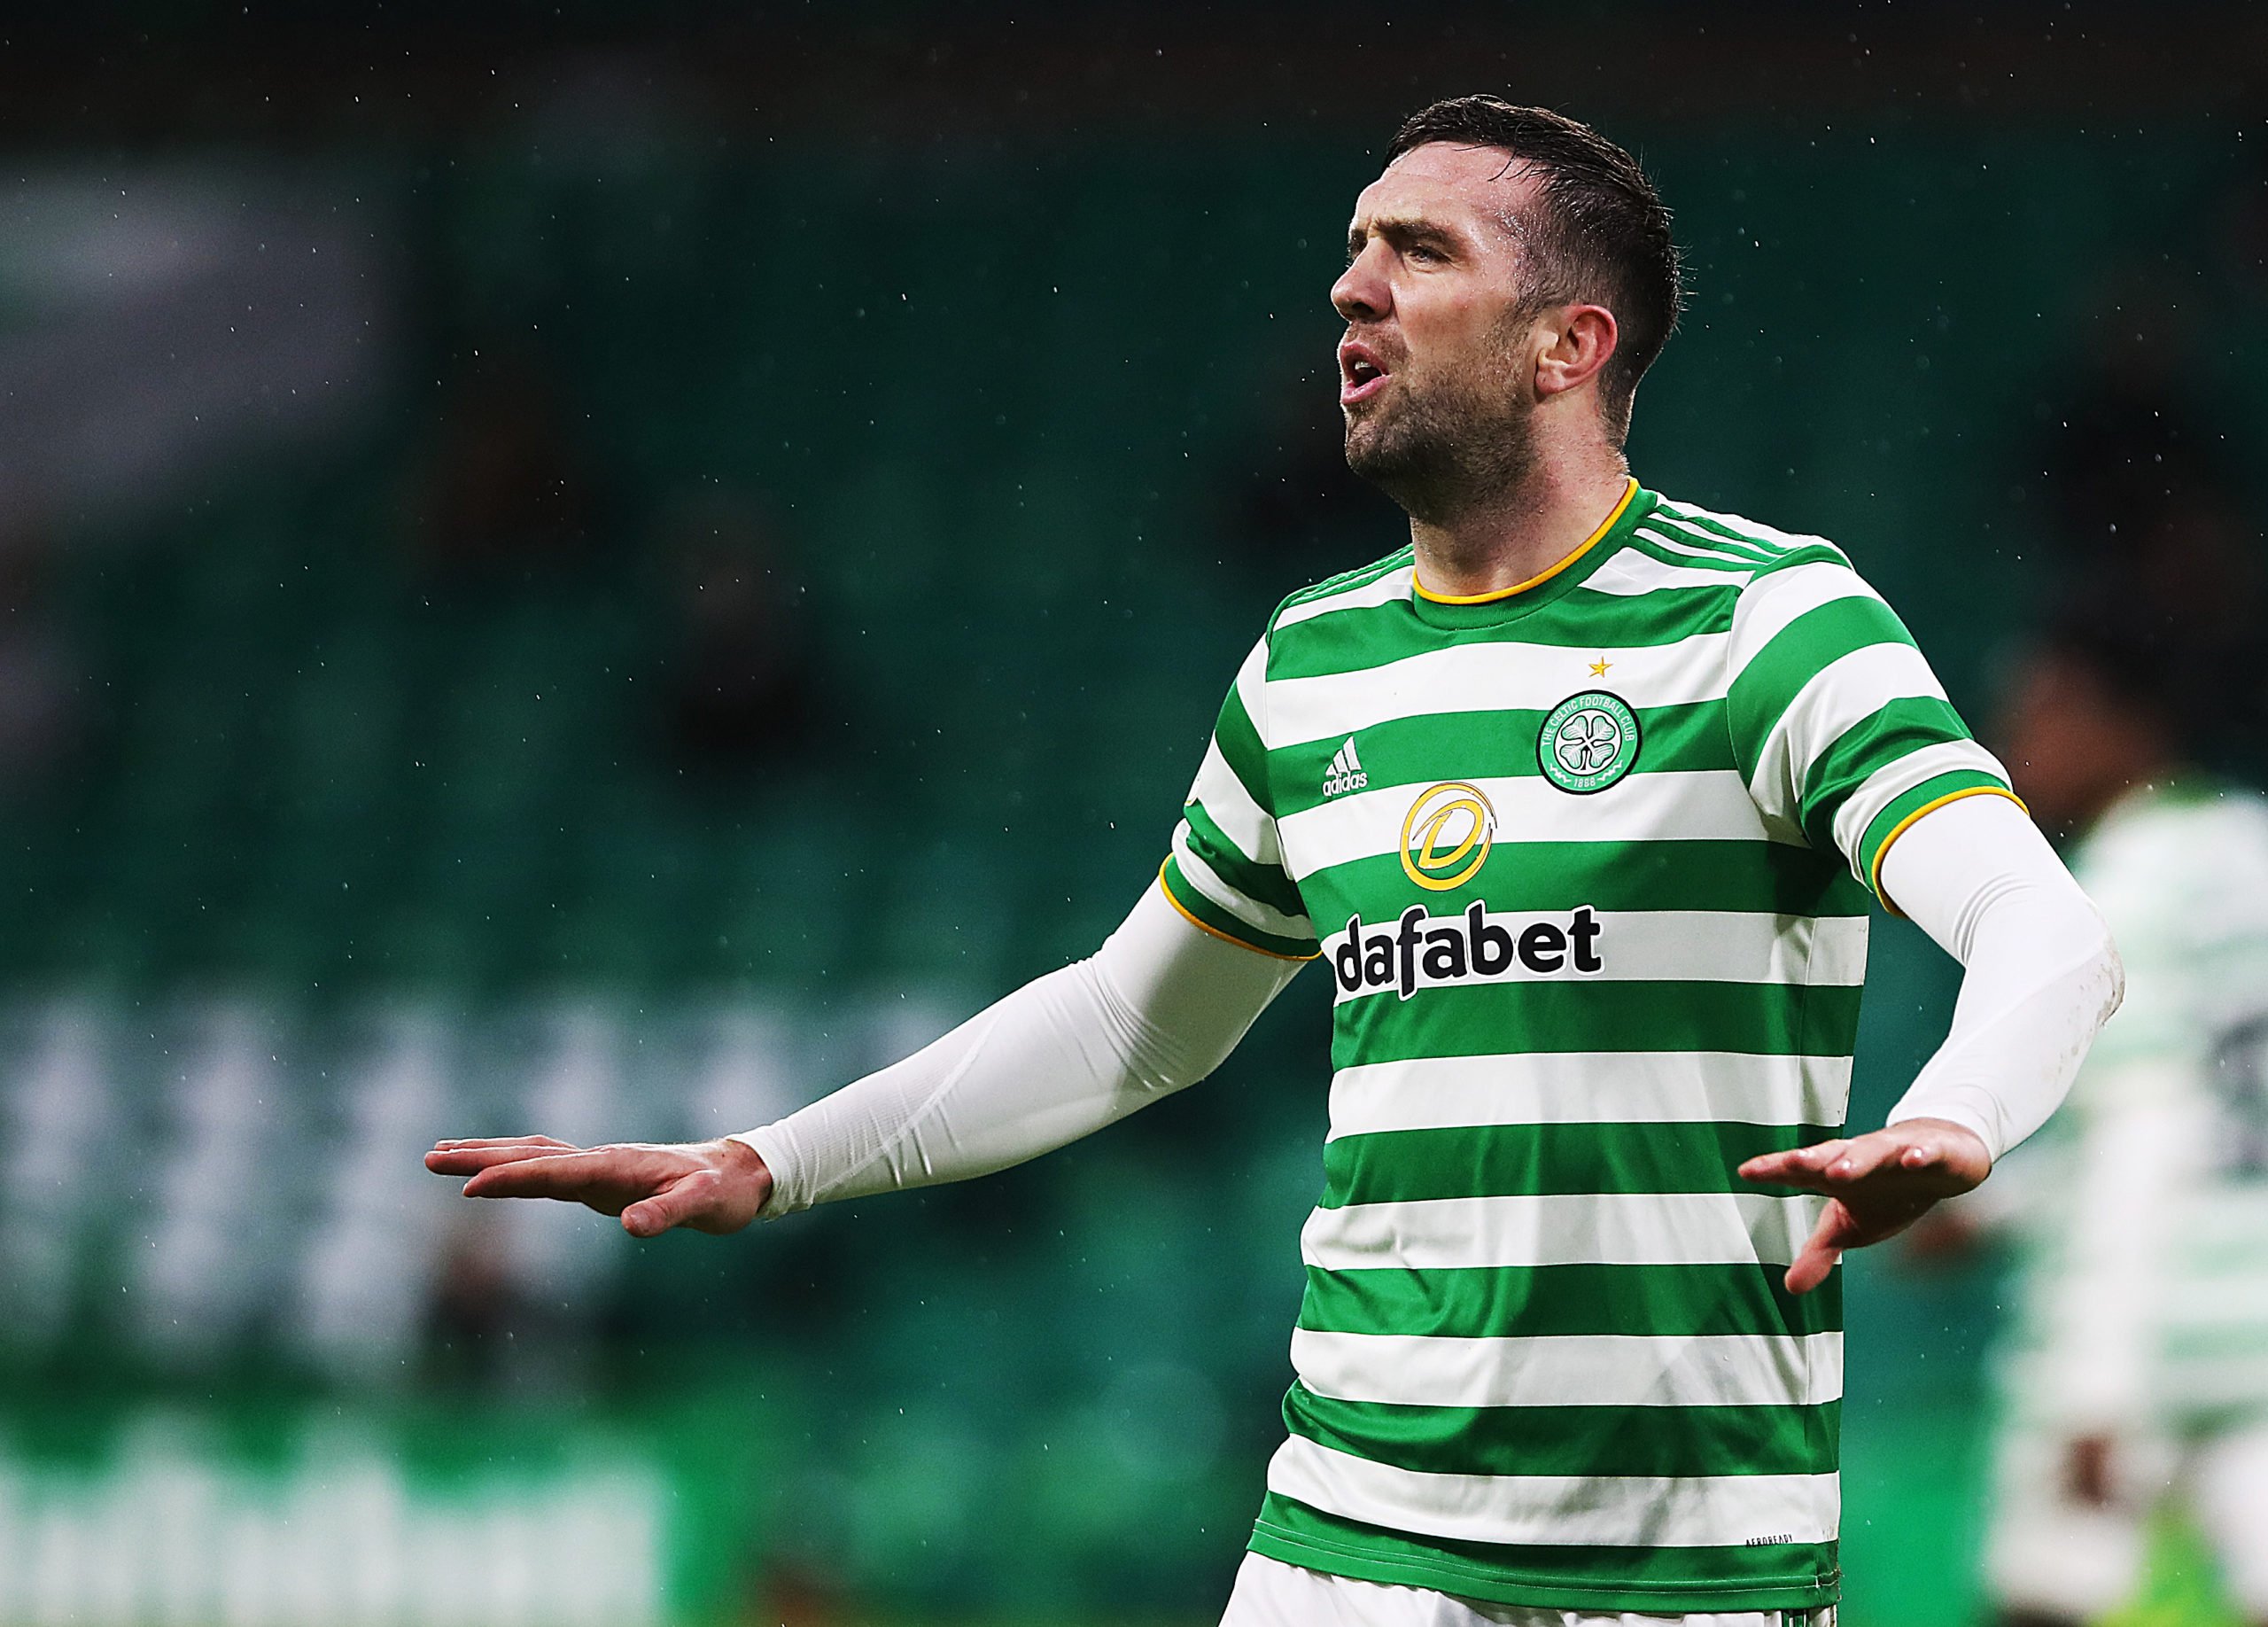 "No action" against Instagram user who abused Celtic defender Shane Duffy